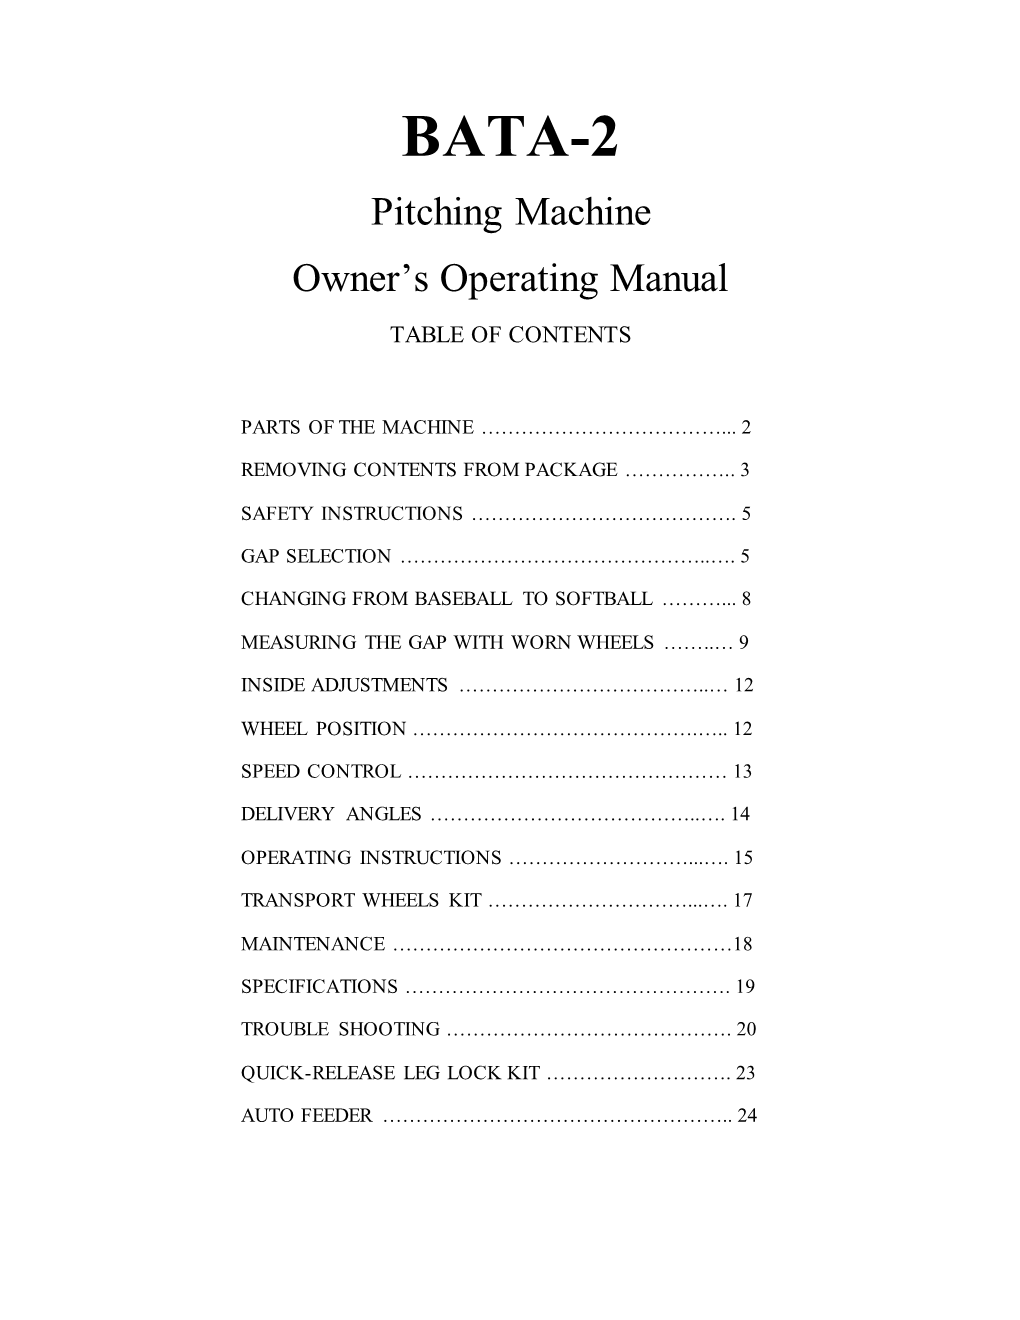 BATA-2 Pitching Machine Owner’S Operating Manual